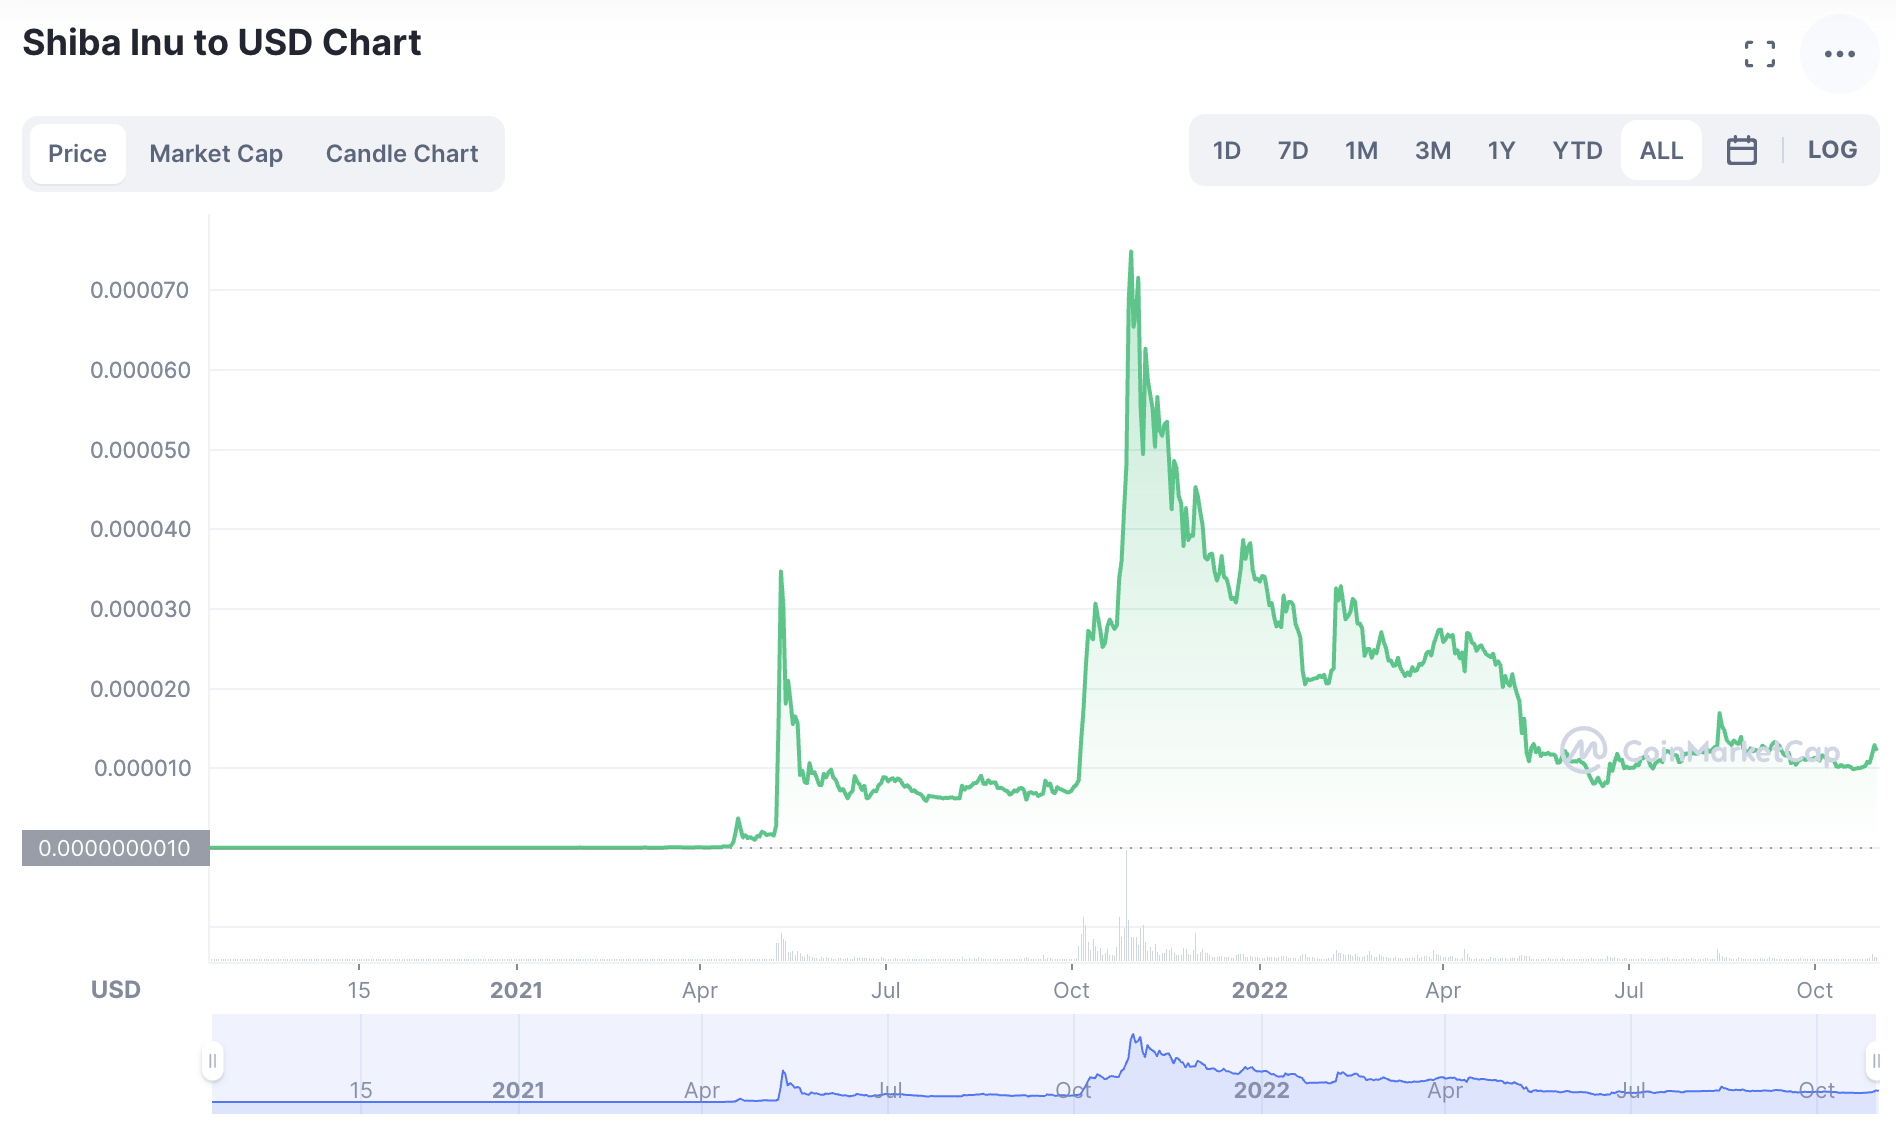 Shiba Inu to USD price chart